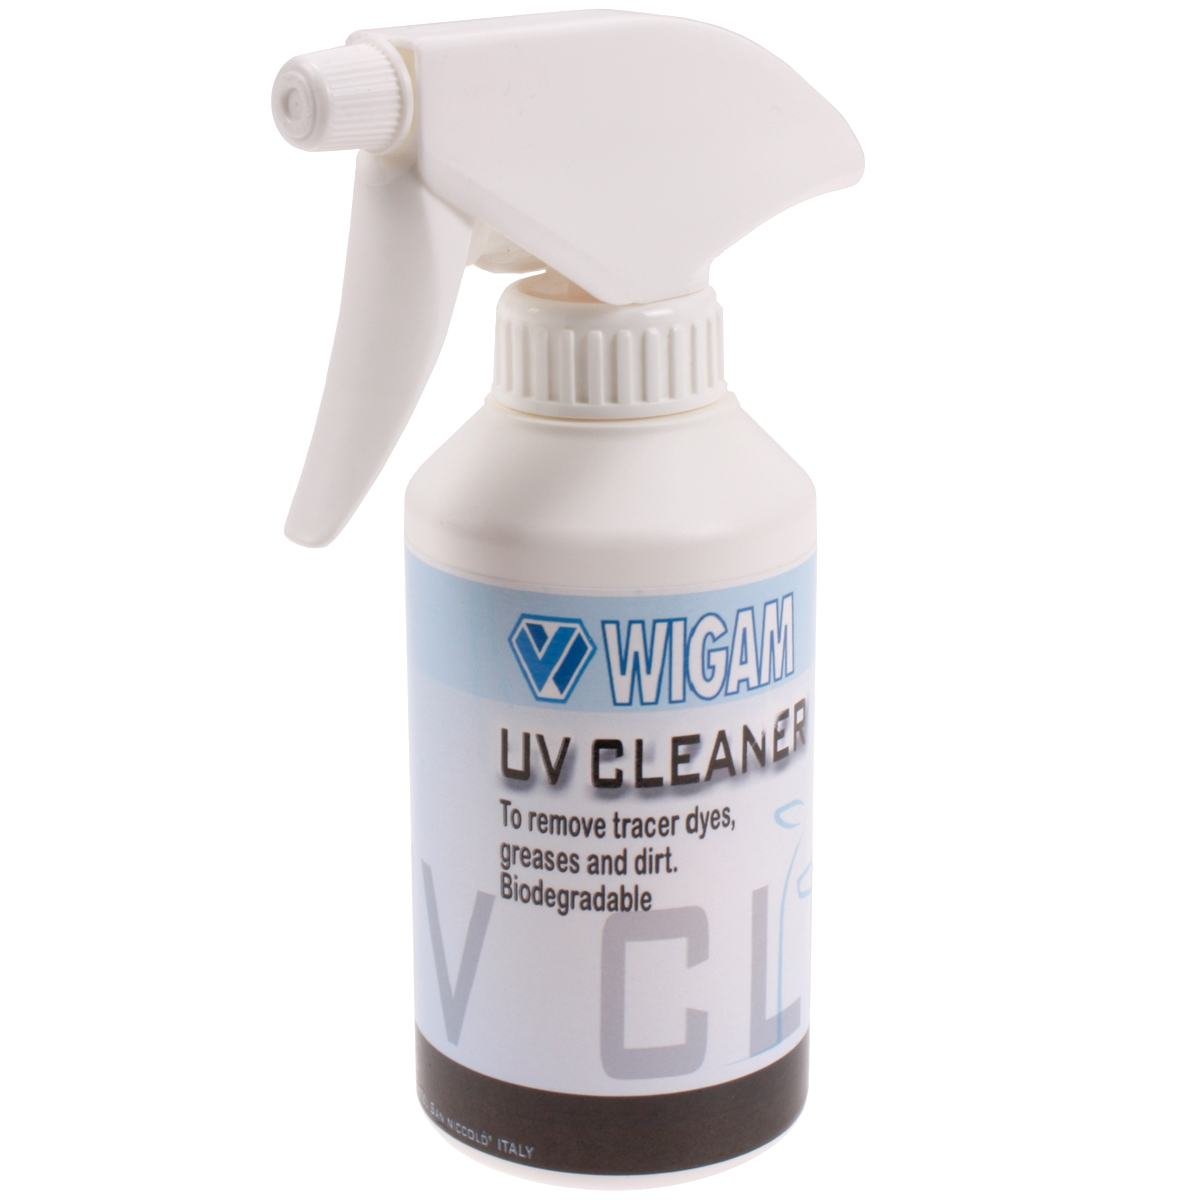 12: UV-Clean250 - UV rensespray 250 ml